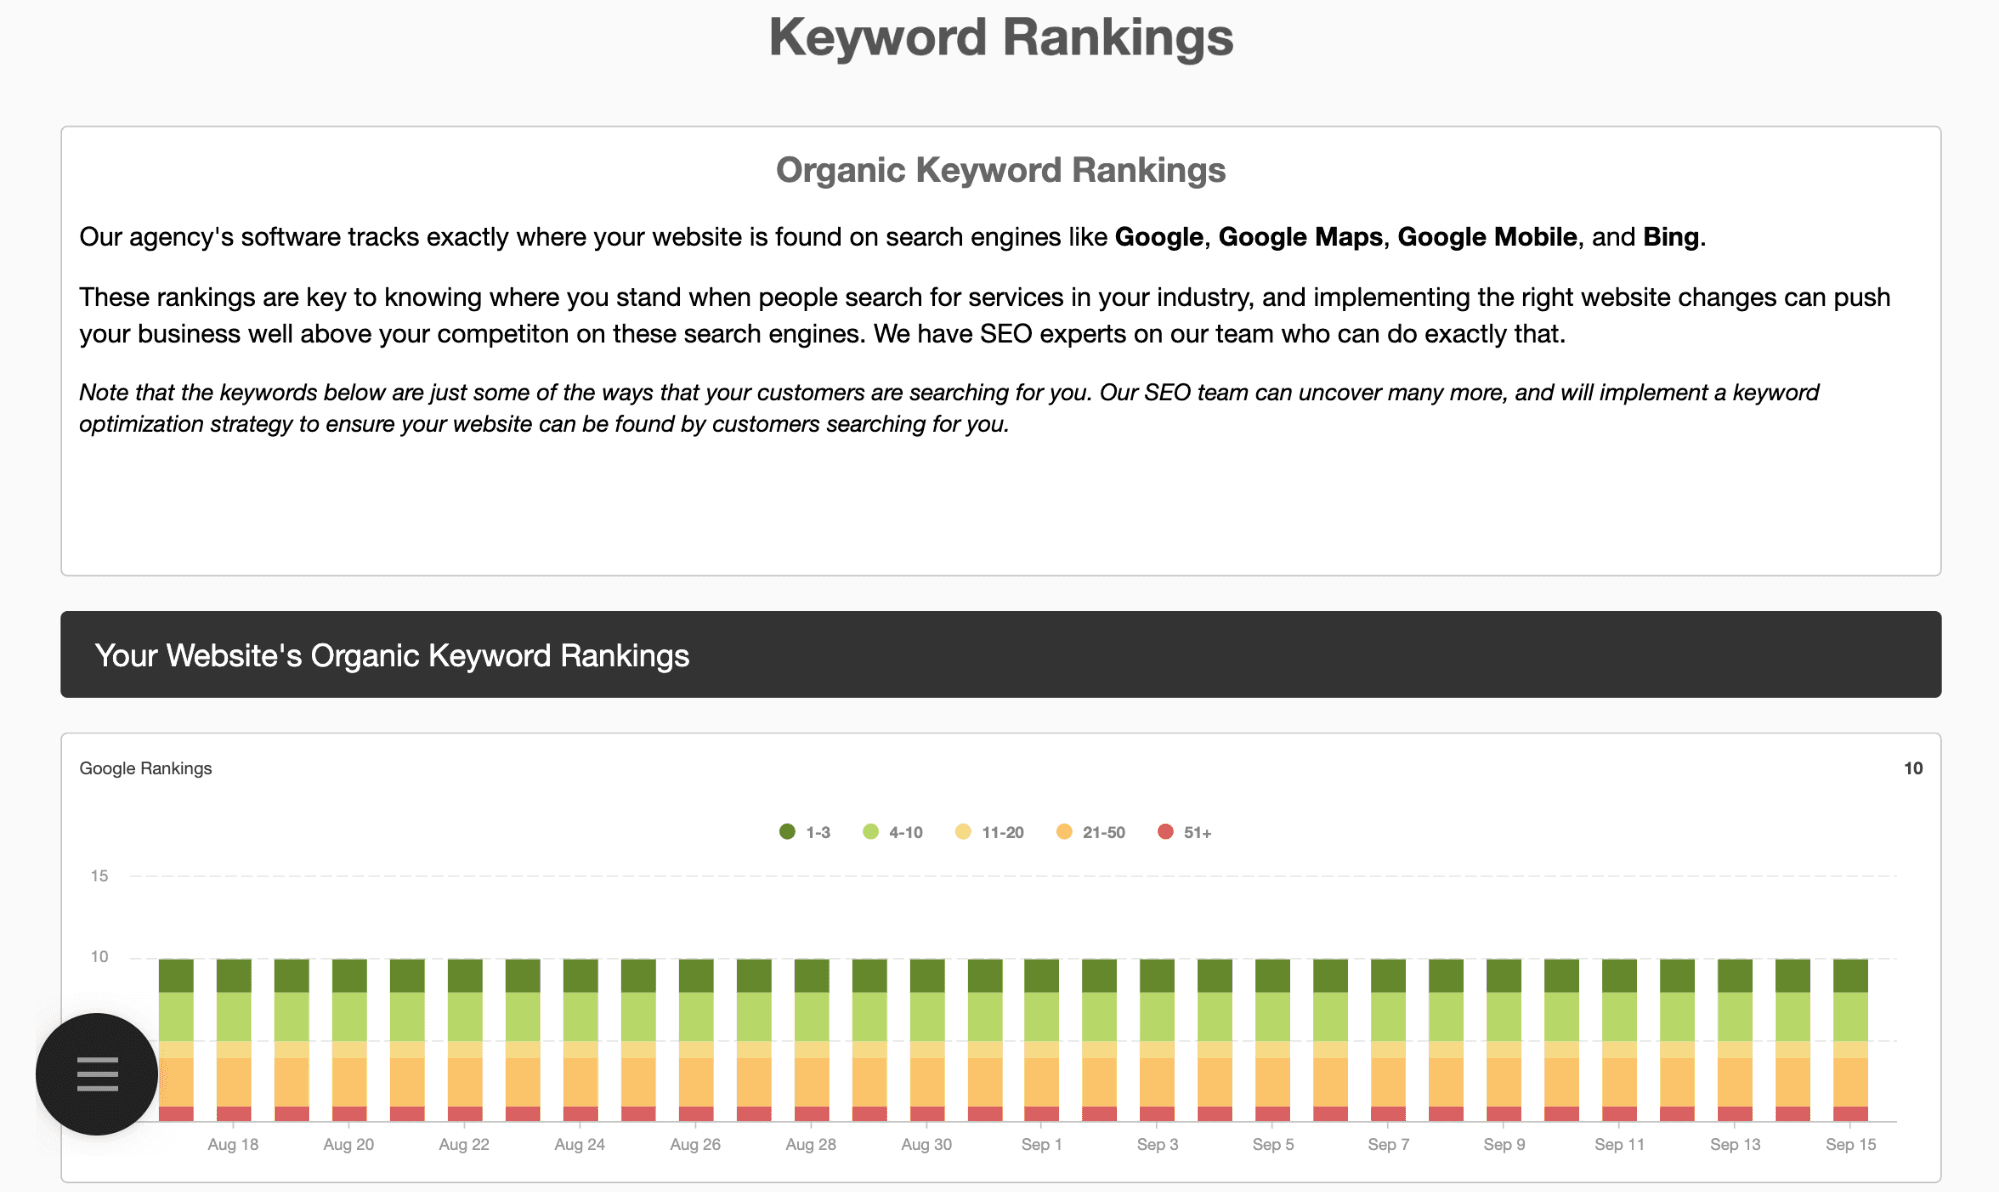 Keyword rankings report